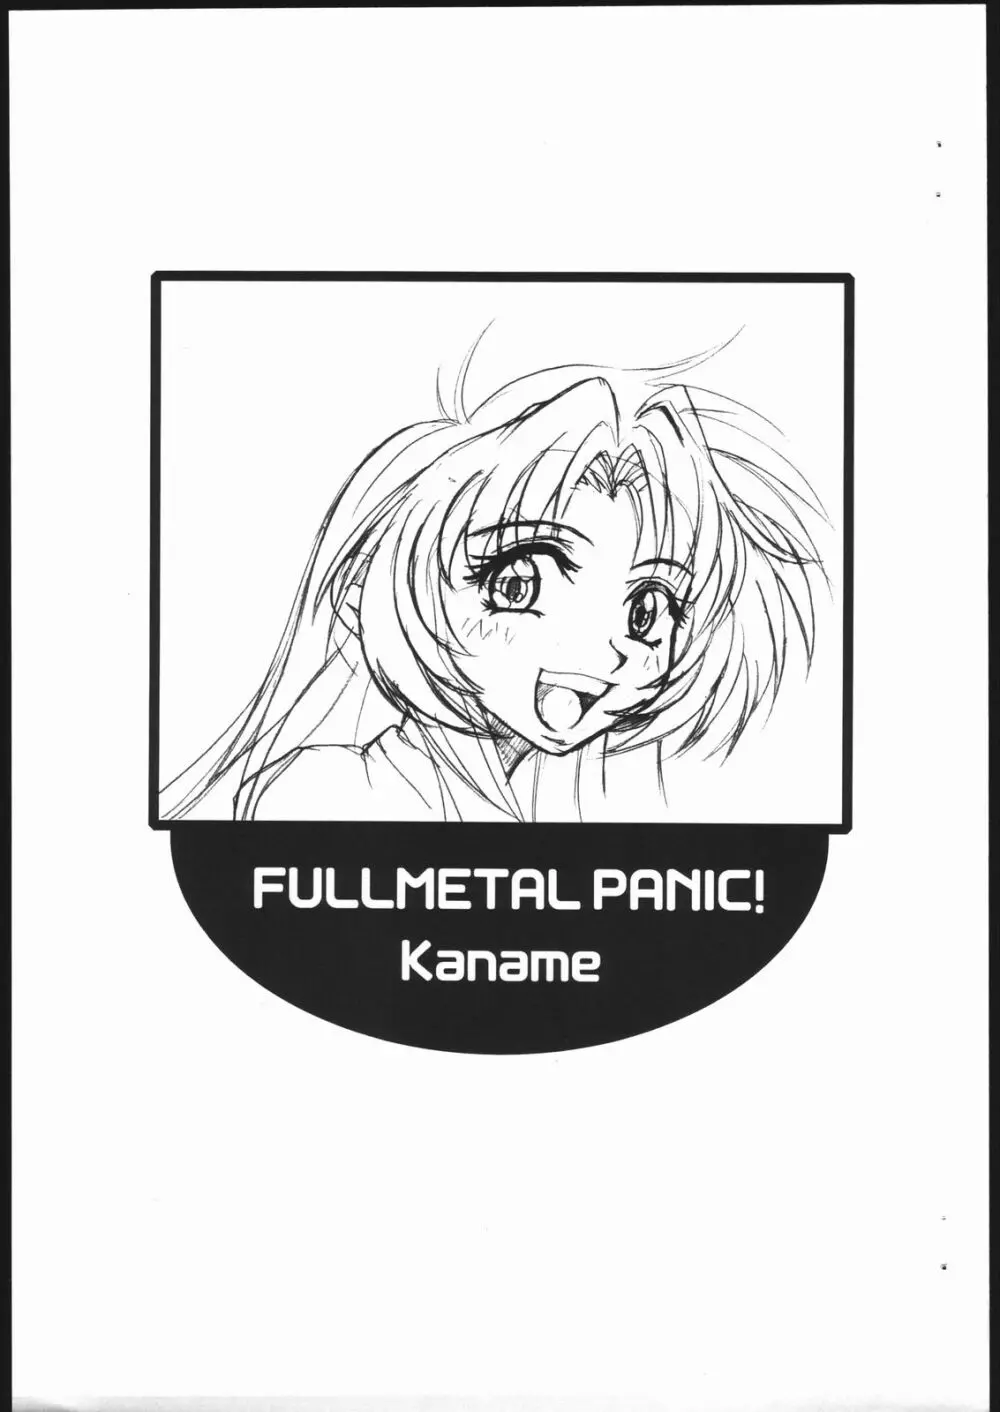 FULLMETAL PANIC! Kaname